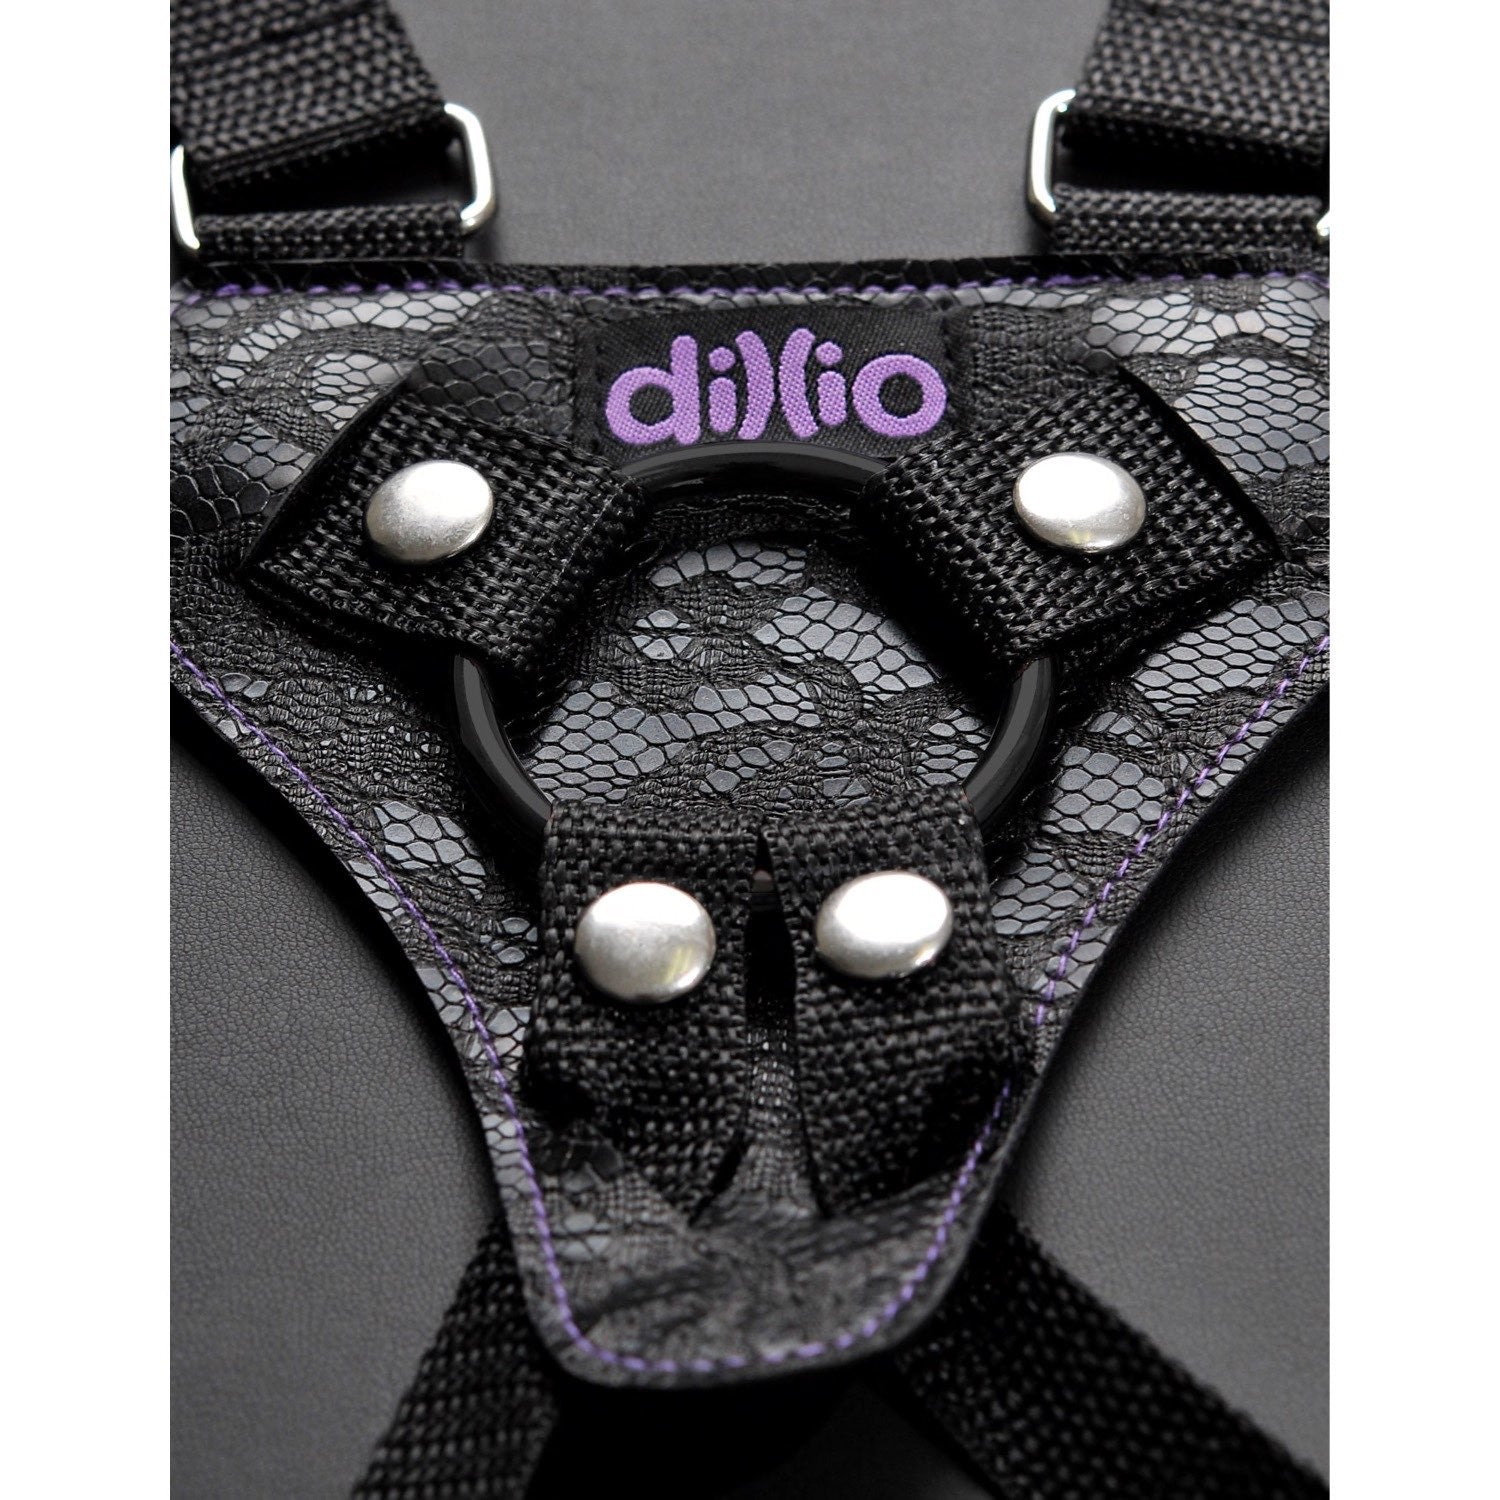 Dillio 6&quot; Strap-On Suspender Harness Set - Purple 15.2 cm Strap-On with Suspender Harness by Pipedream